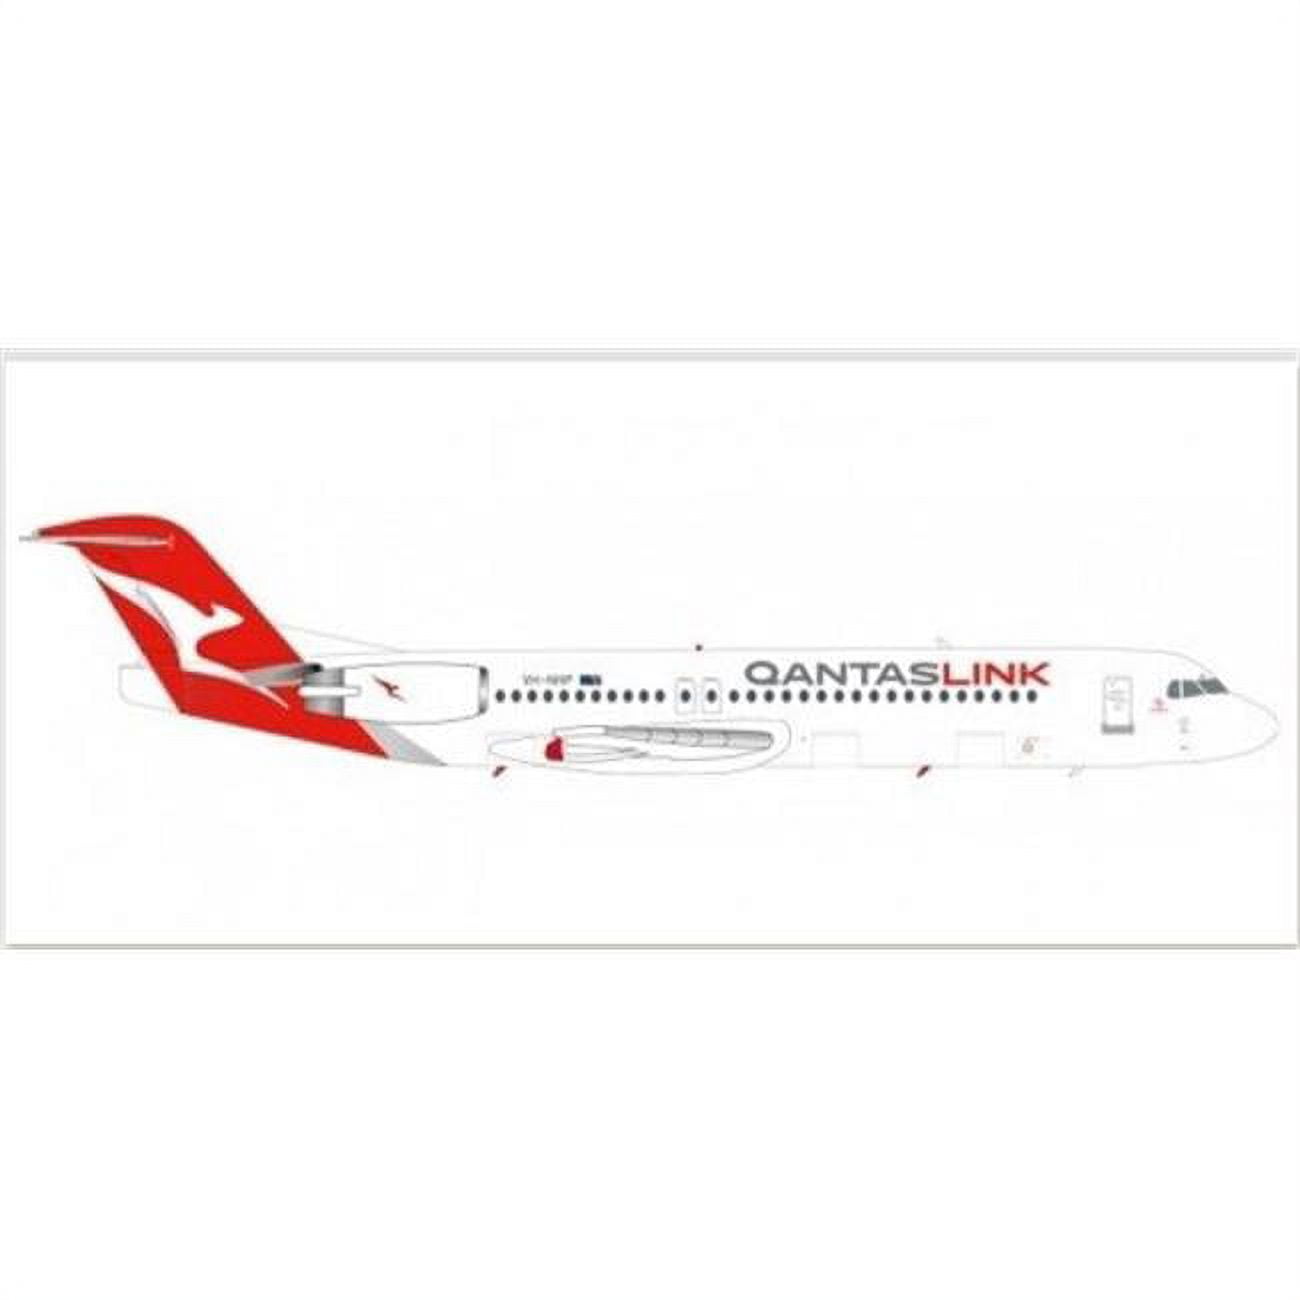 He559096 1 Isto 200 Qantas Link Fokker F-100 Model Planes